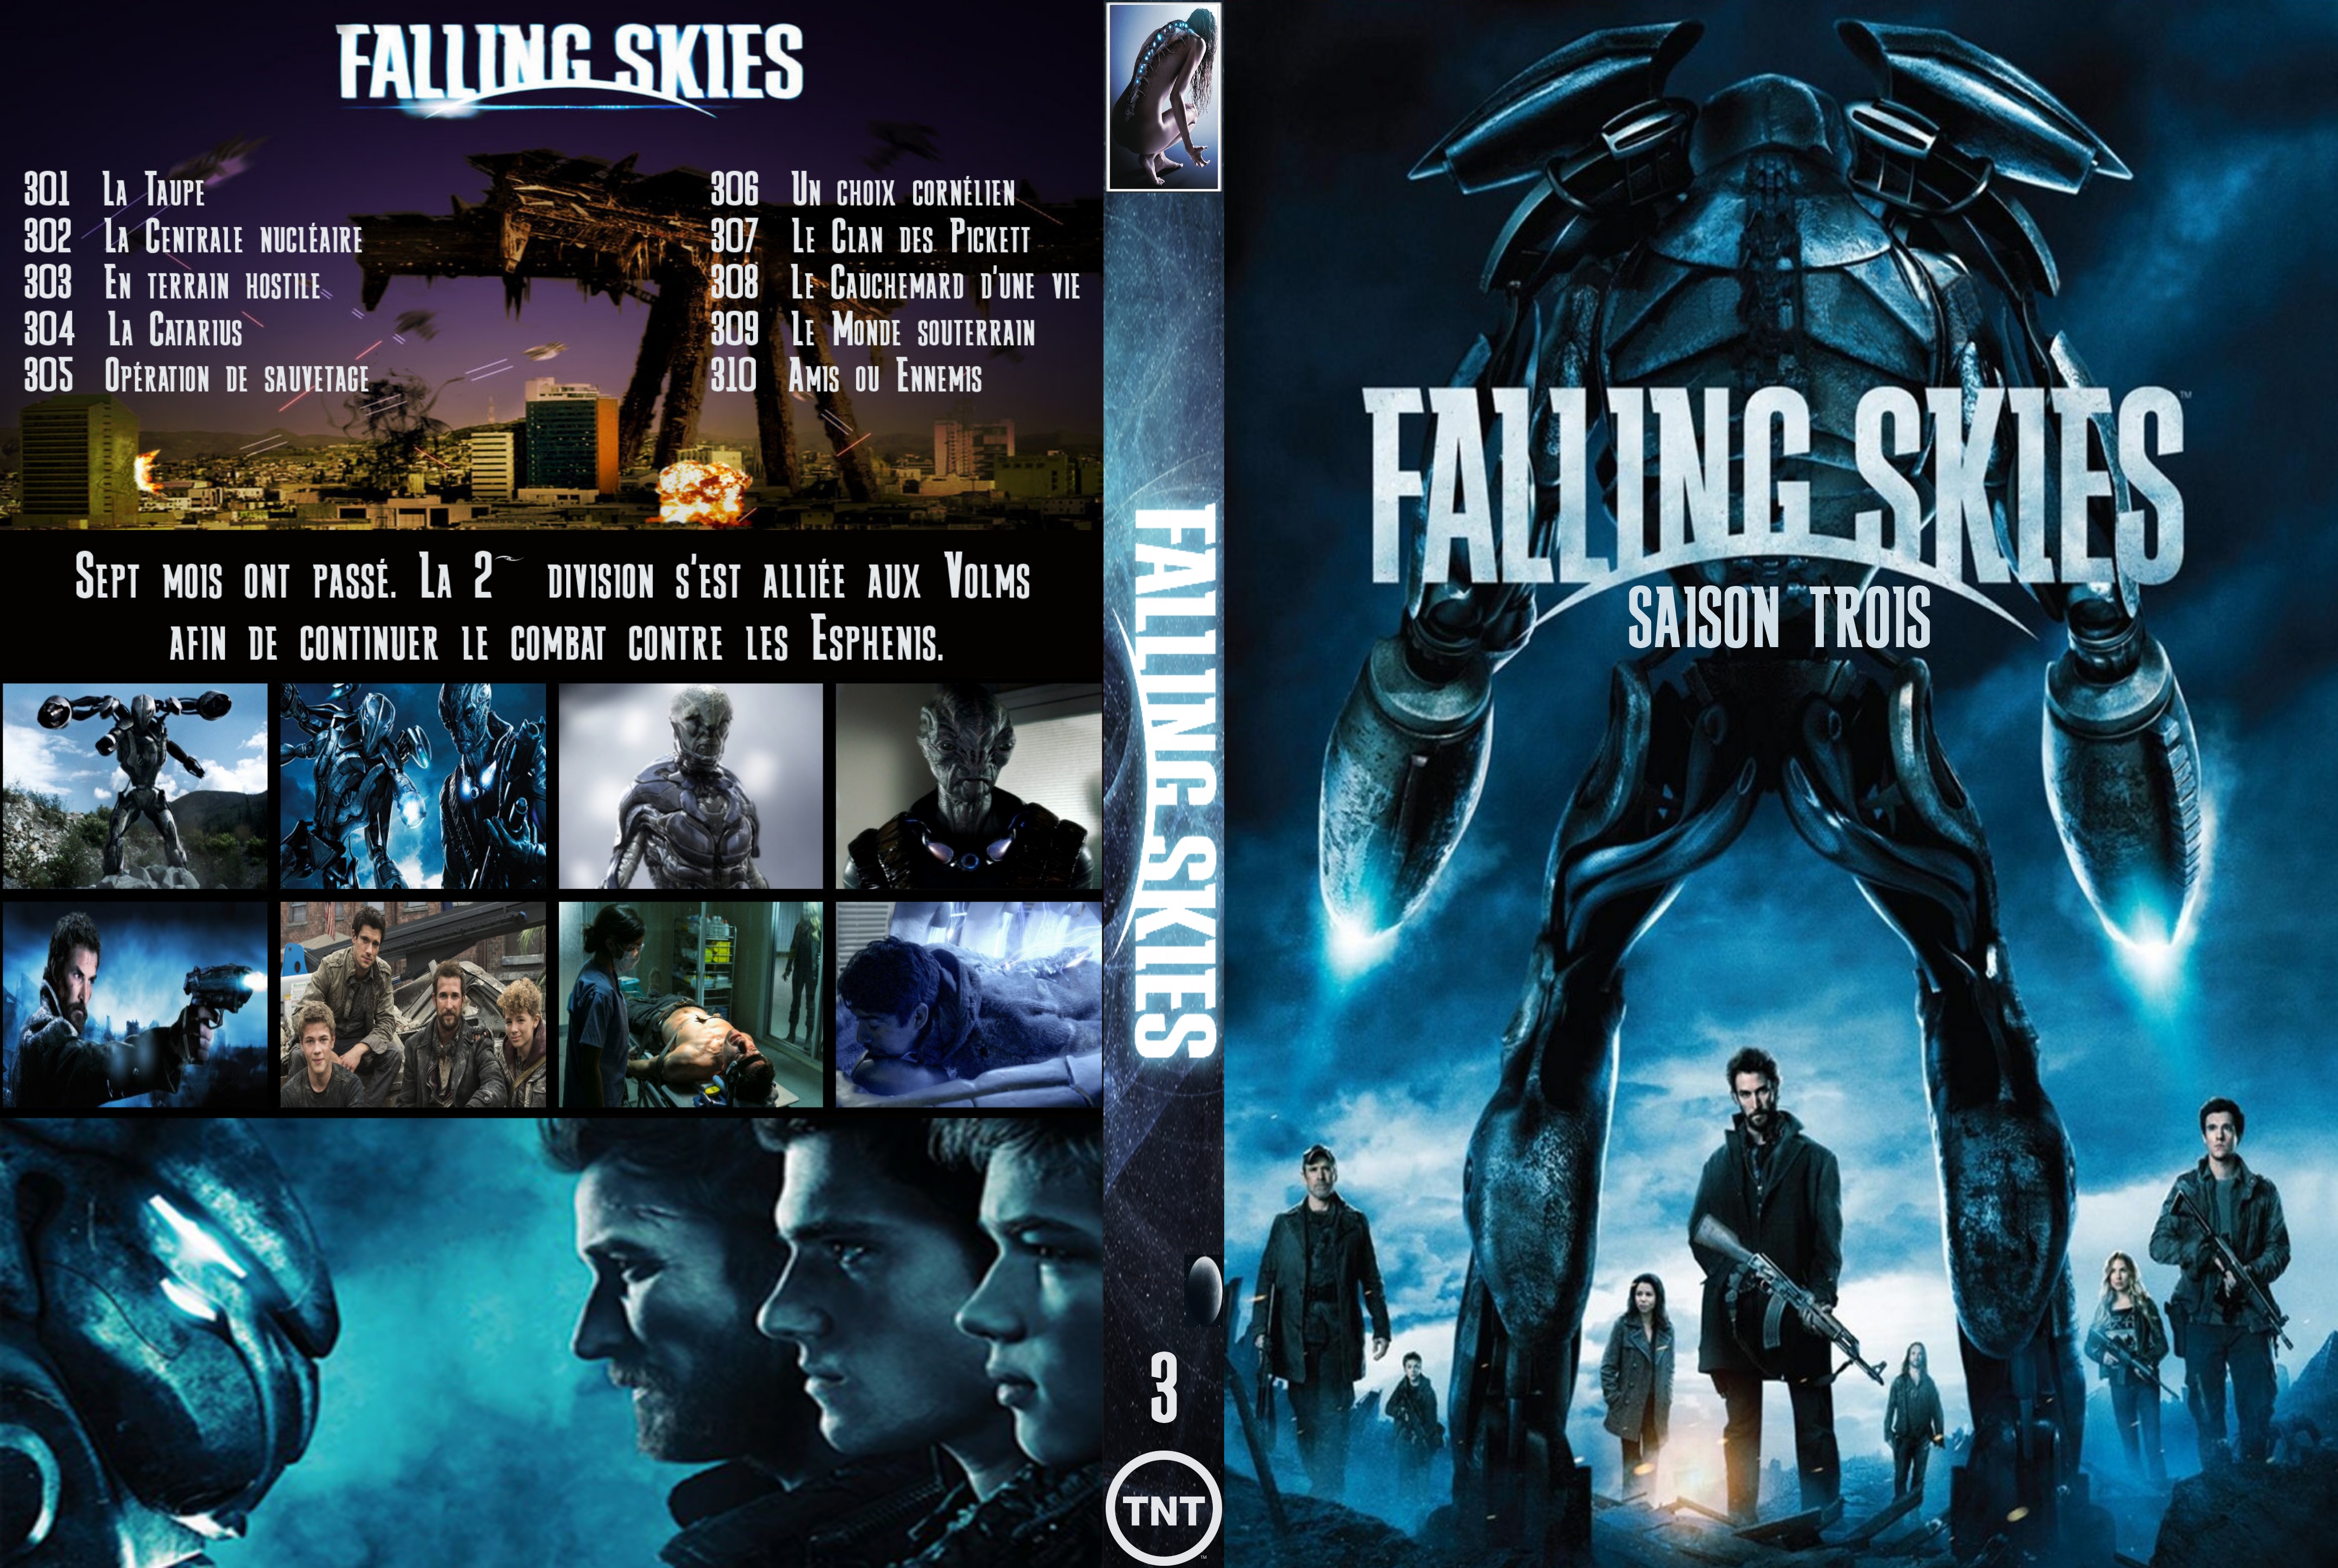 Jaquette DVD Falling Skies Saison 3 custom